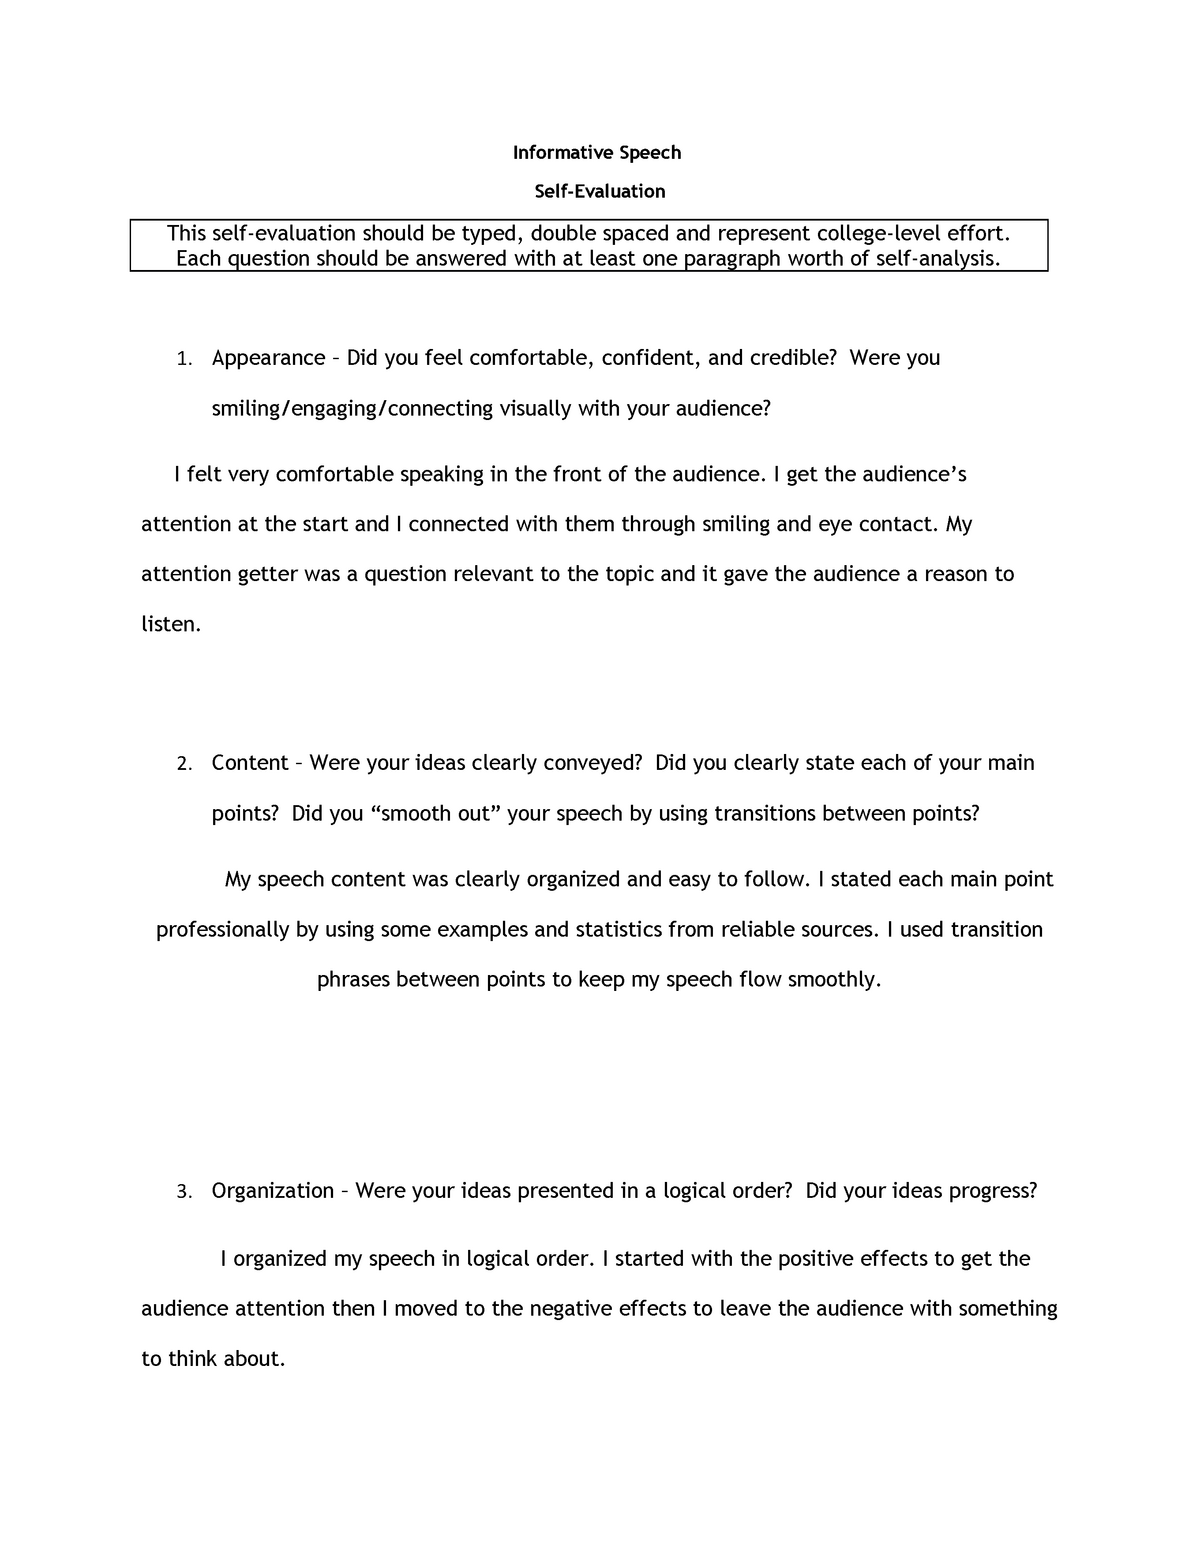 self evaluation paper for speech class